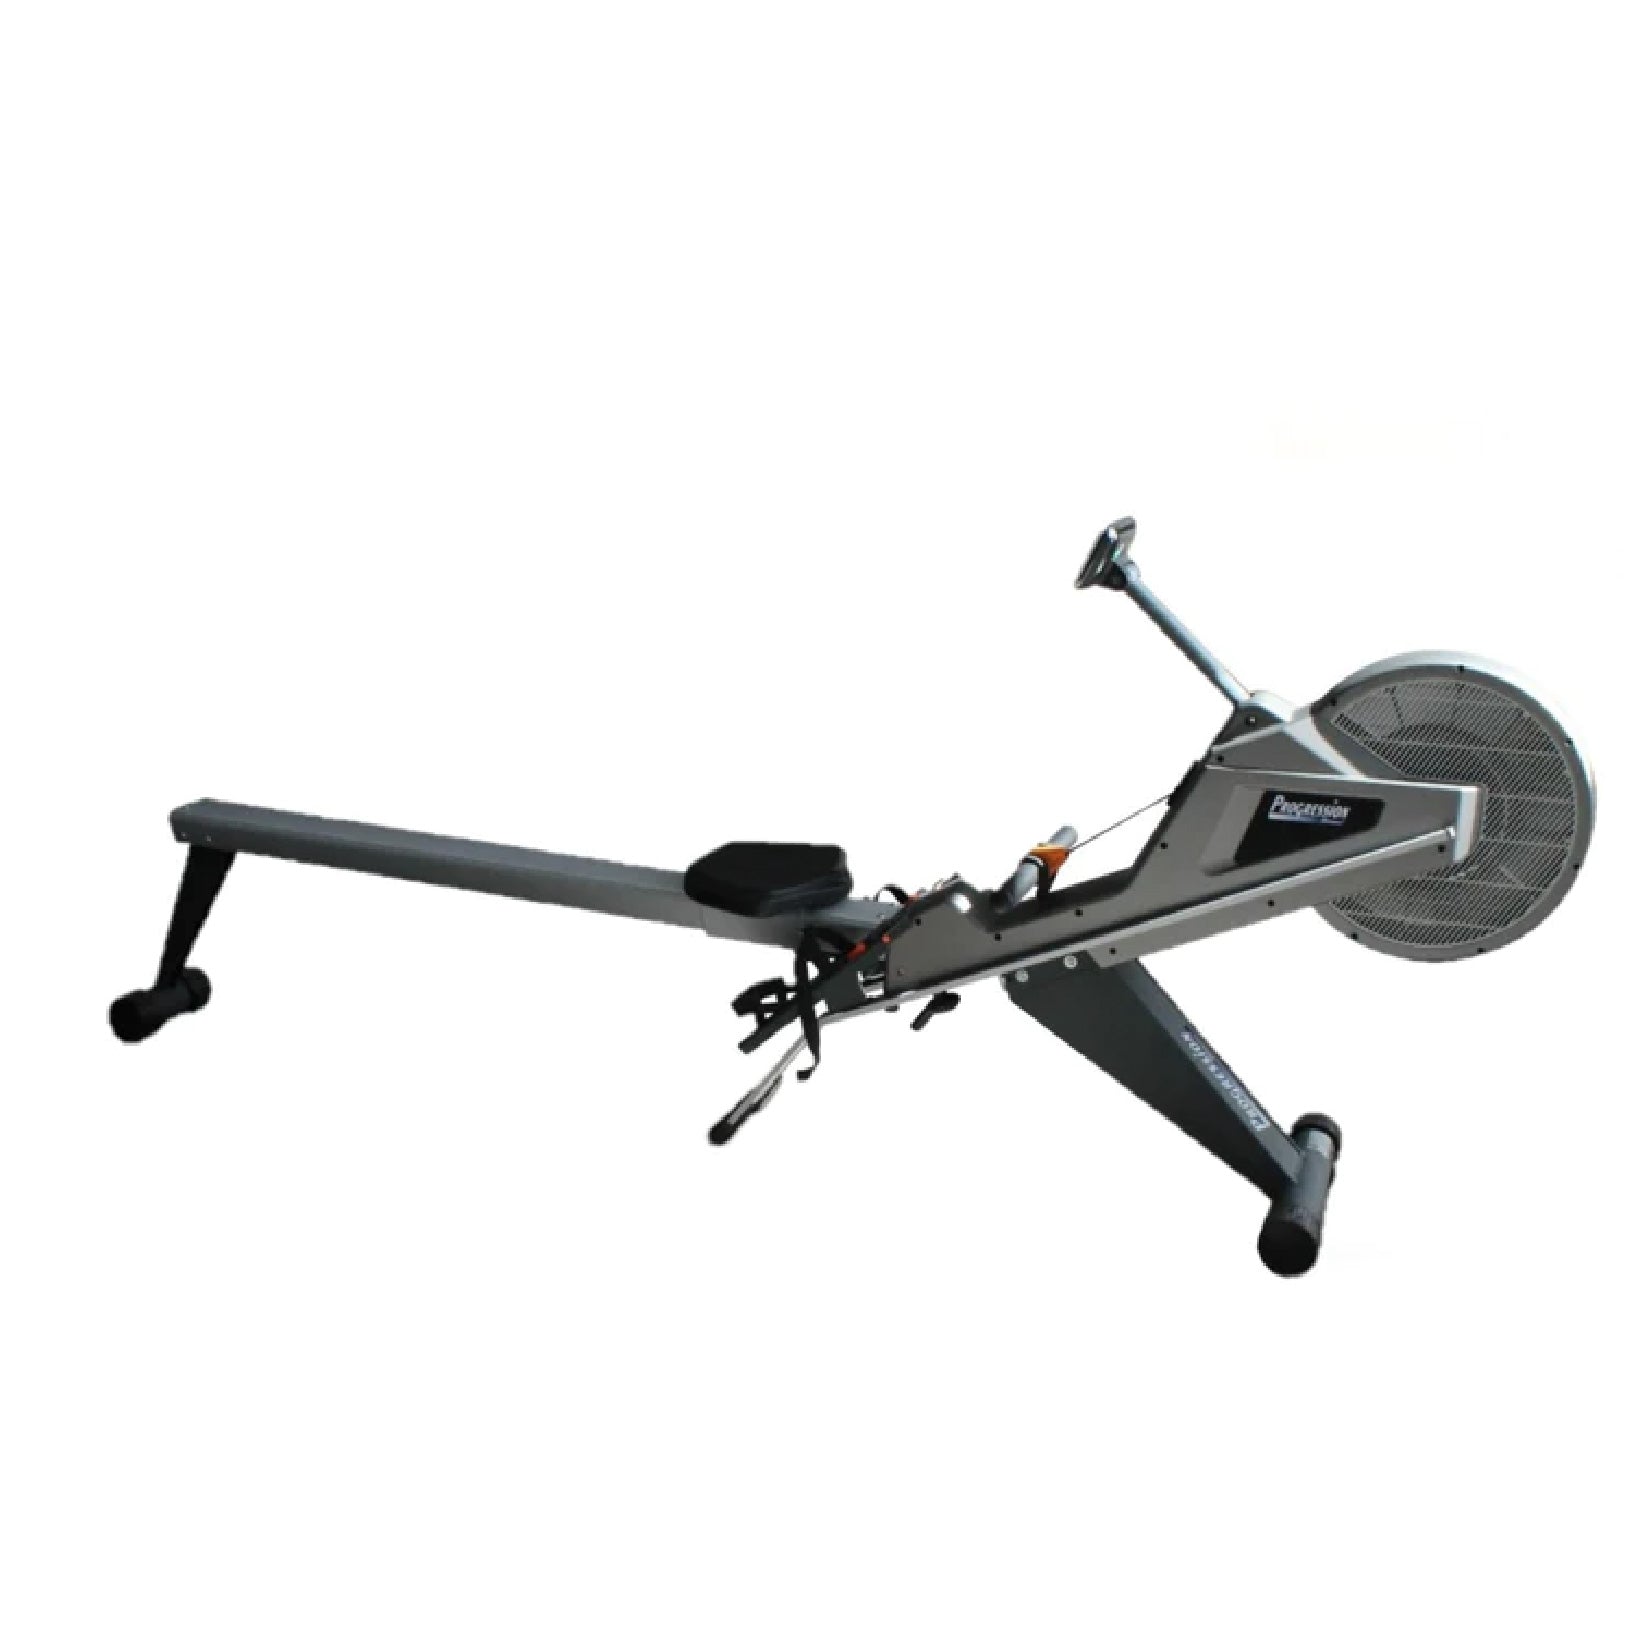 Progression R700 Rower-Belt Linked Rower-Progression Fitness-1